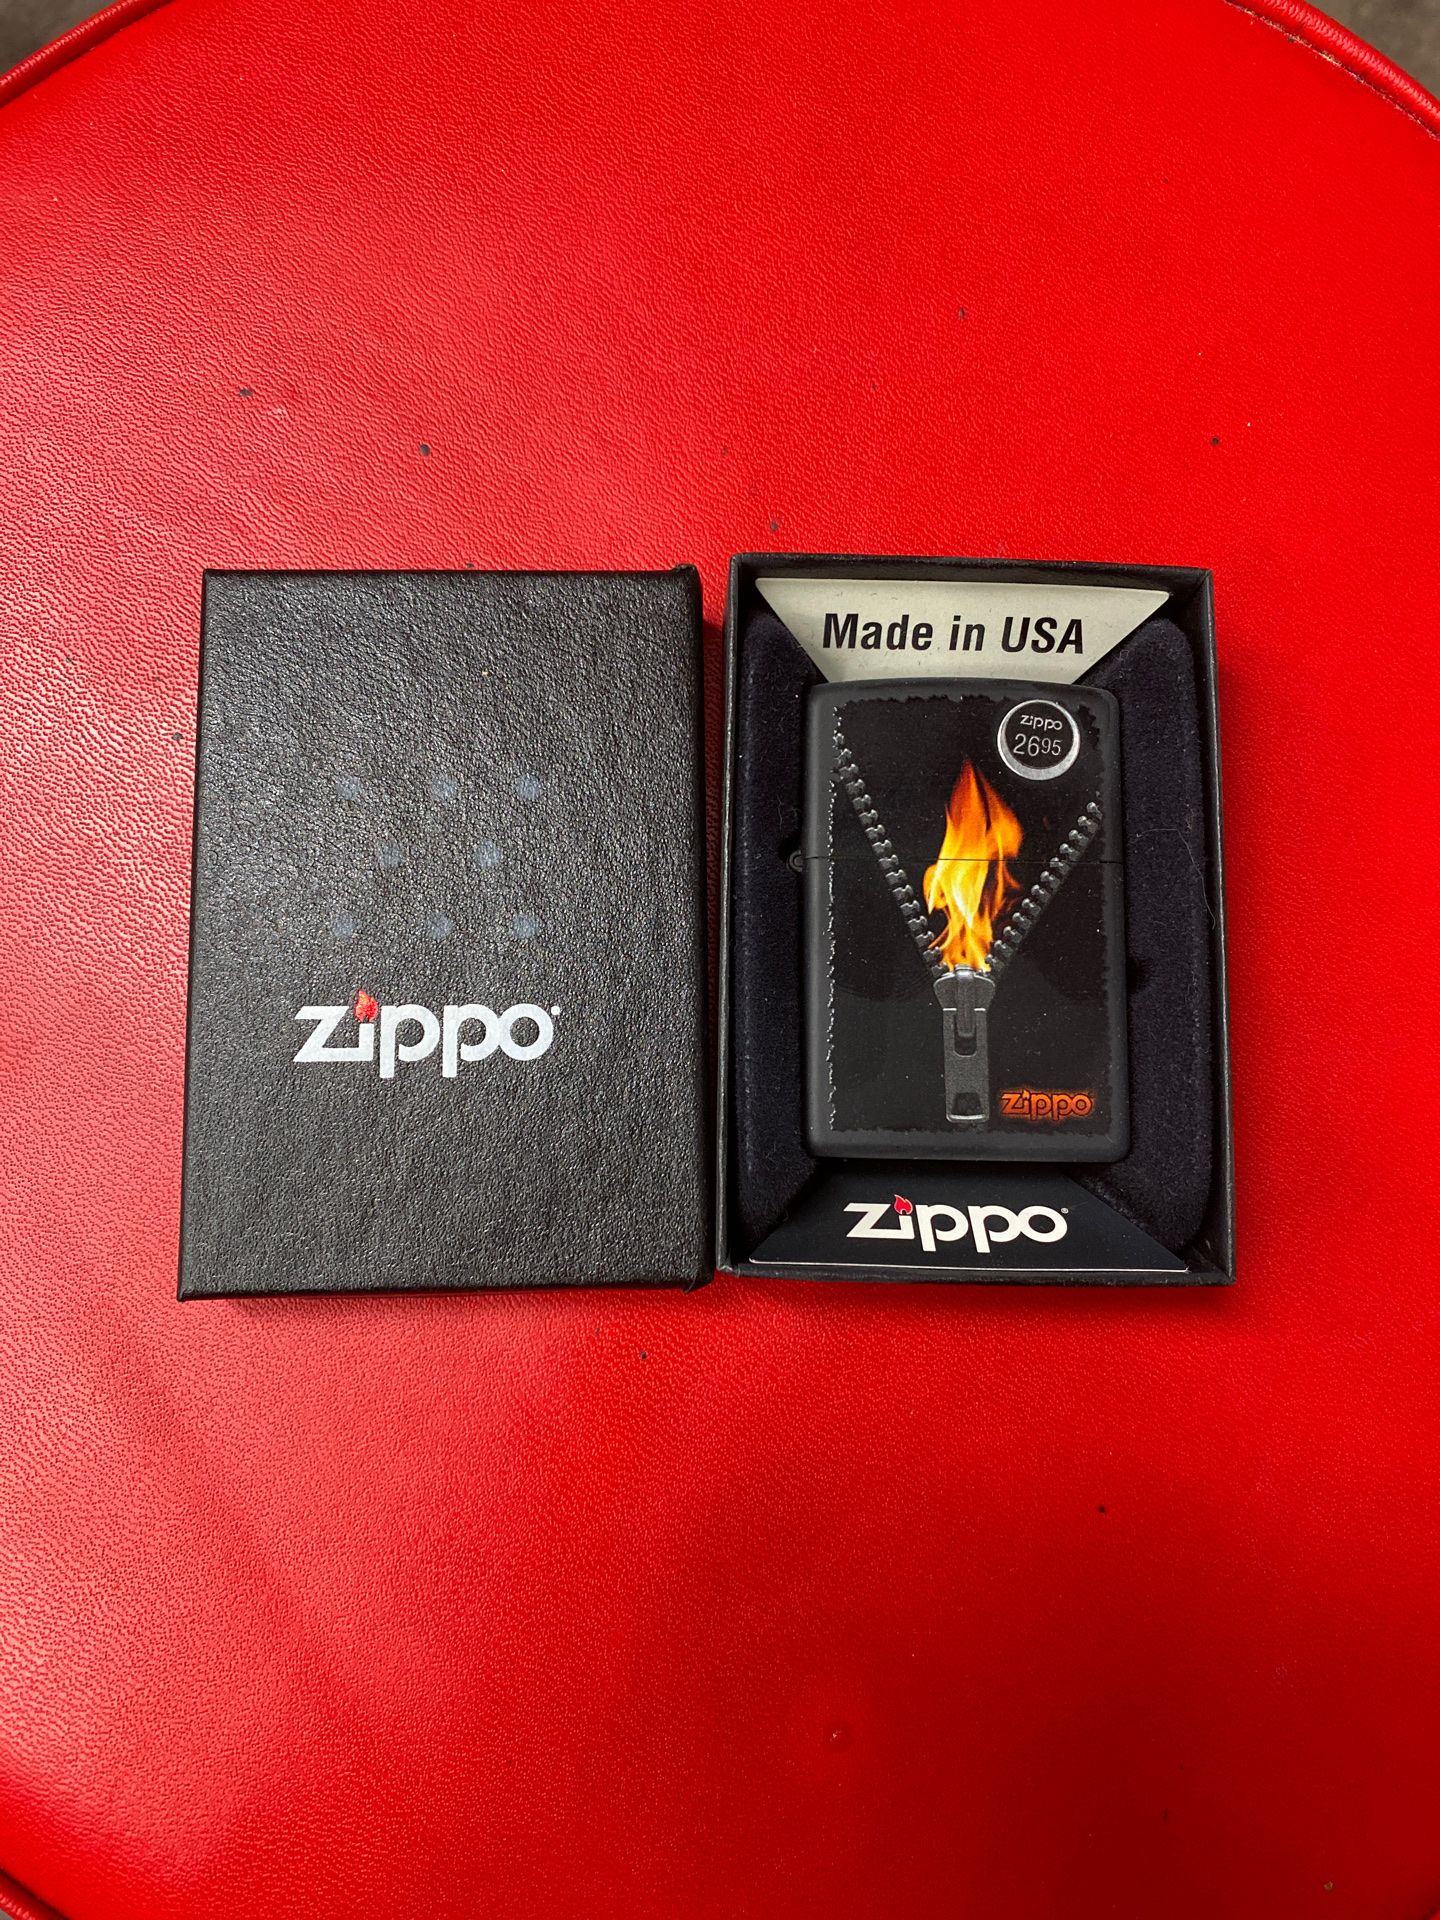 Zipper Flame zippo